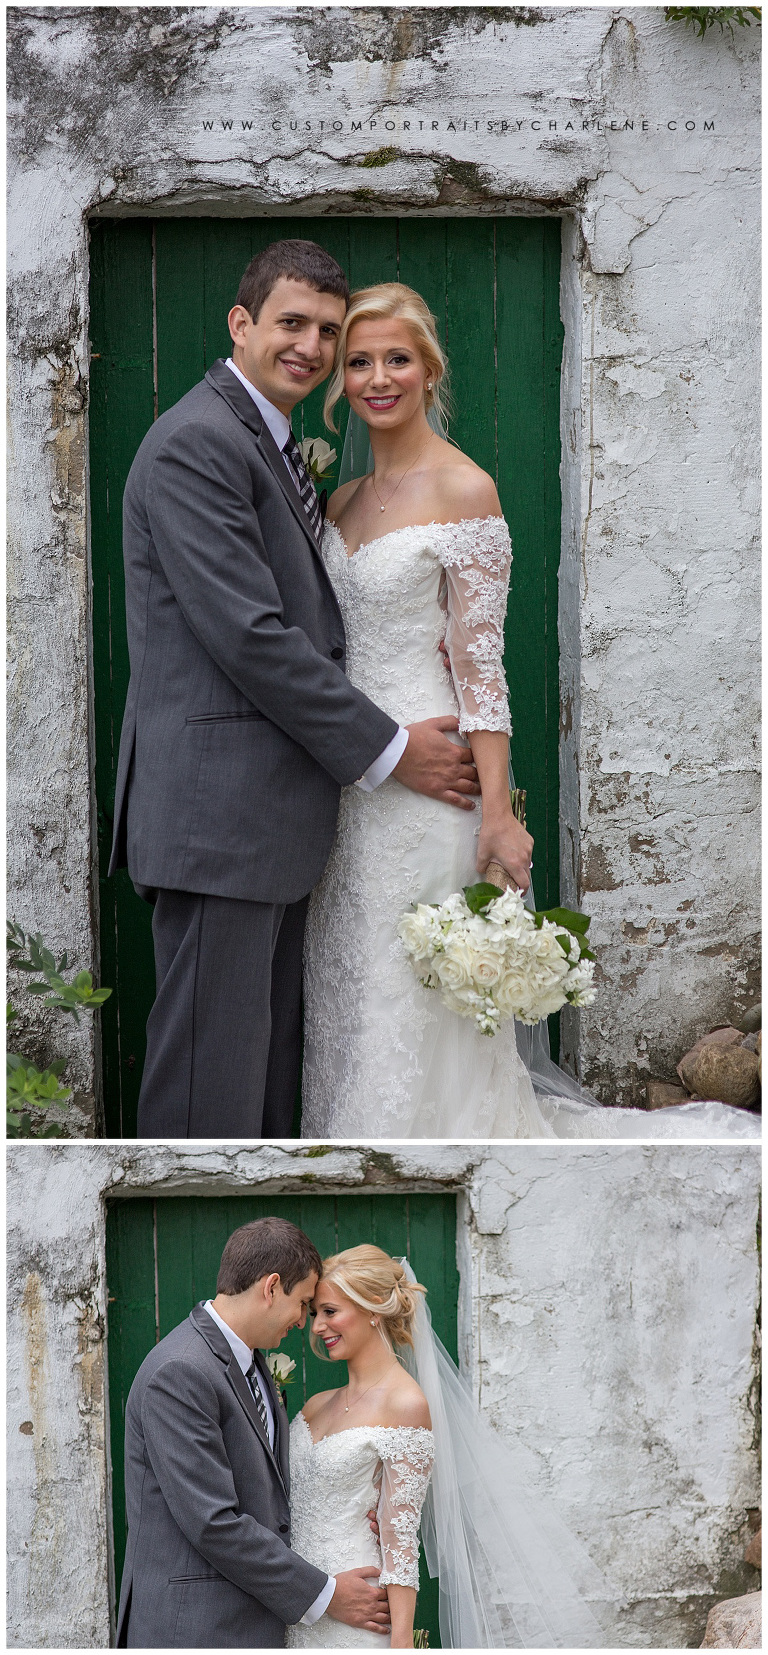 lingrow-farm-wedding-photographer-pittsburgh-ceremony-reception-farm-barn-rustic-wedding-photography14